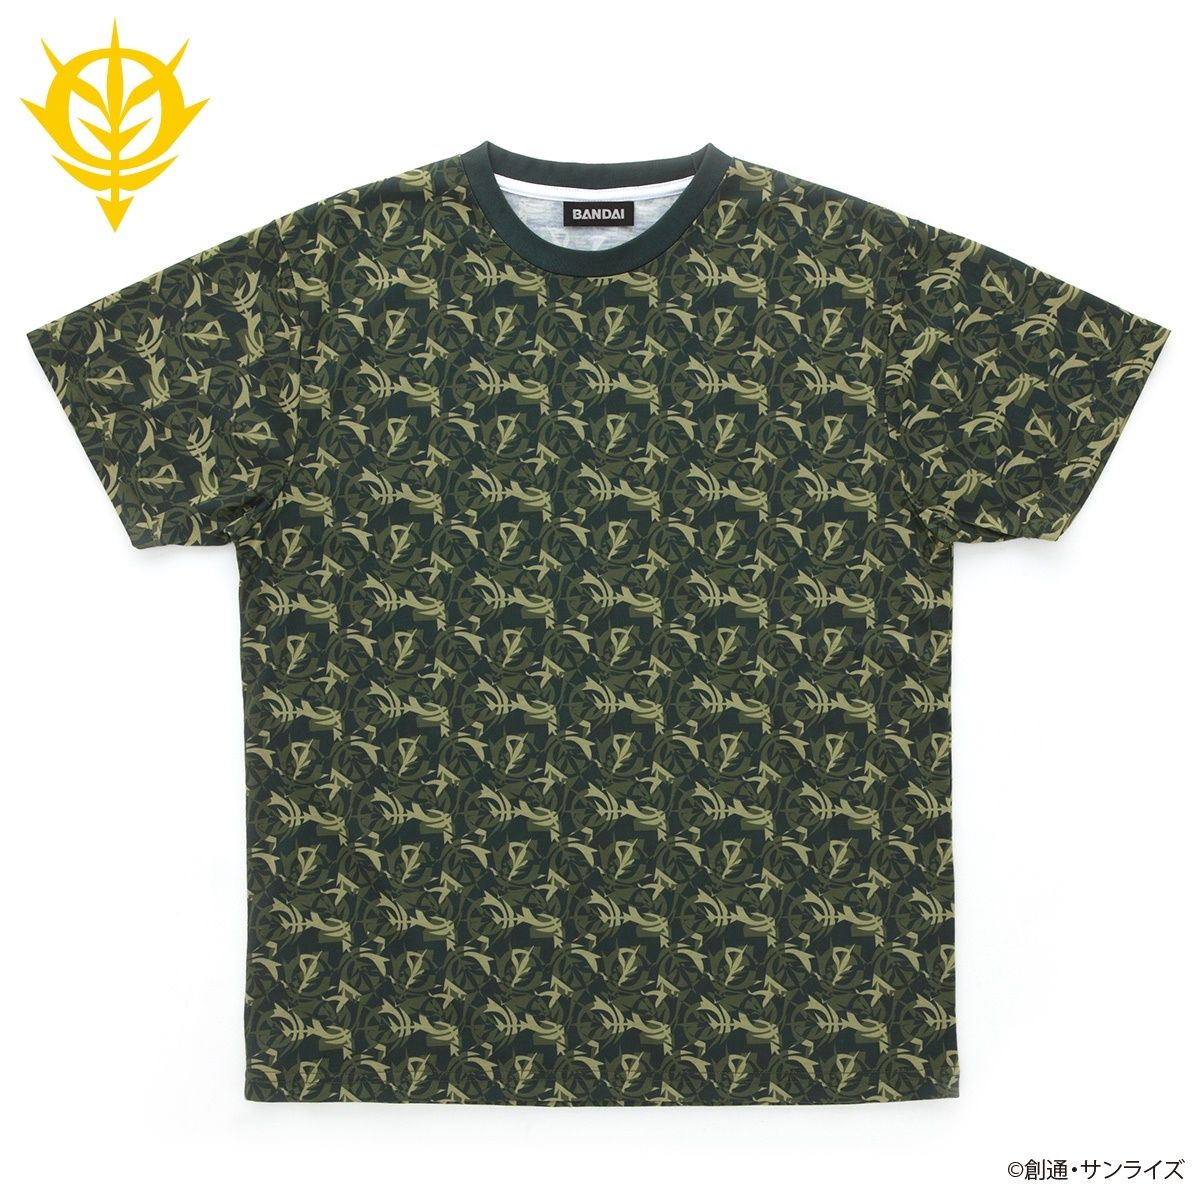 Mobile Suit Gundam Camouflage T-shirt